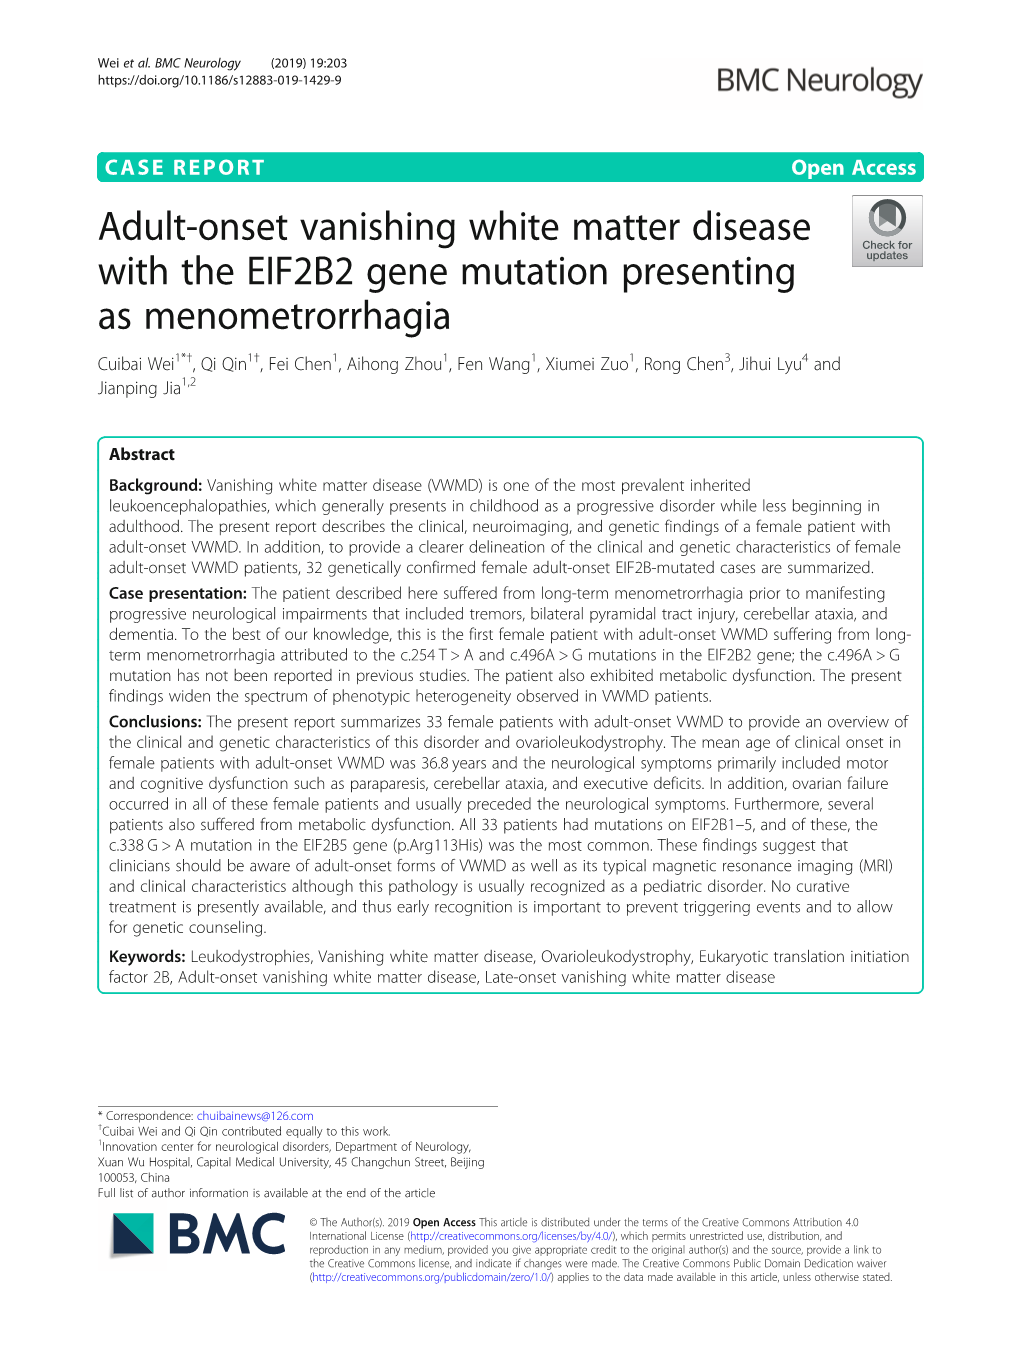 Adult-Onset Vanishing White Matter Disease with the EIF2B2 Gene Mutation Presenting As Menometrorrhagia